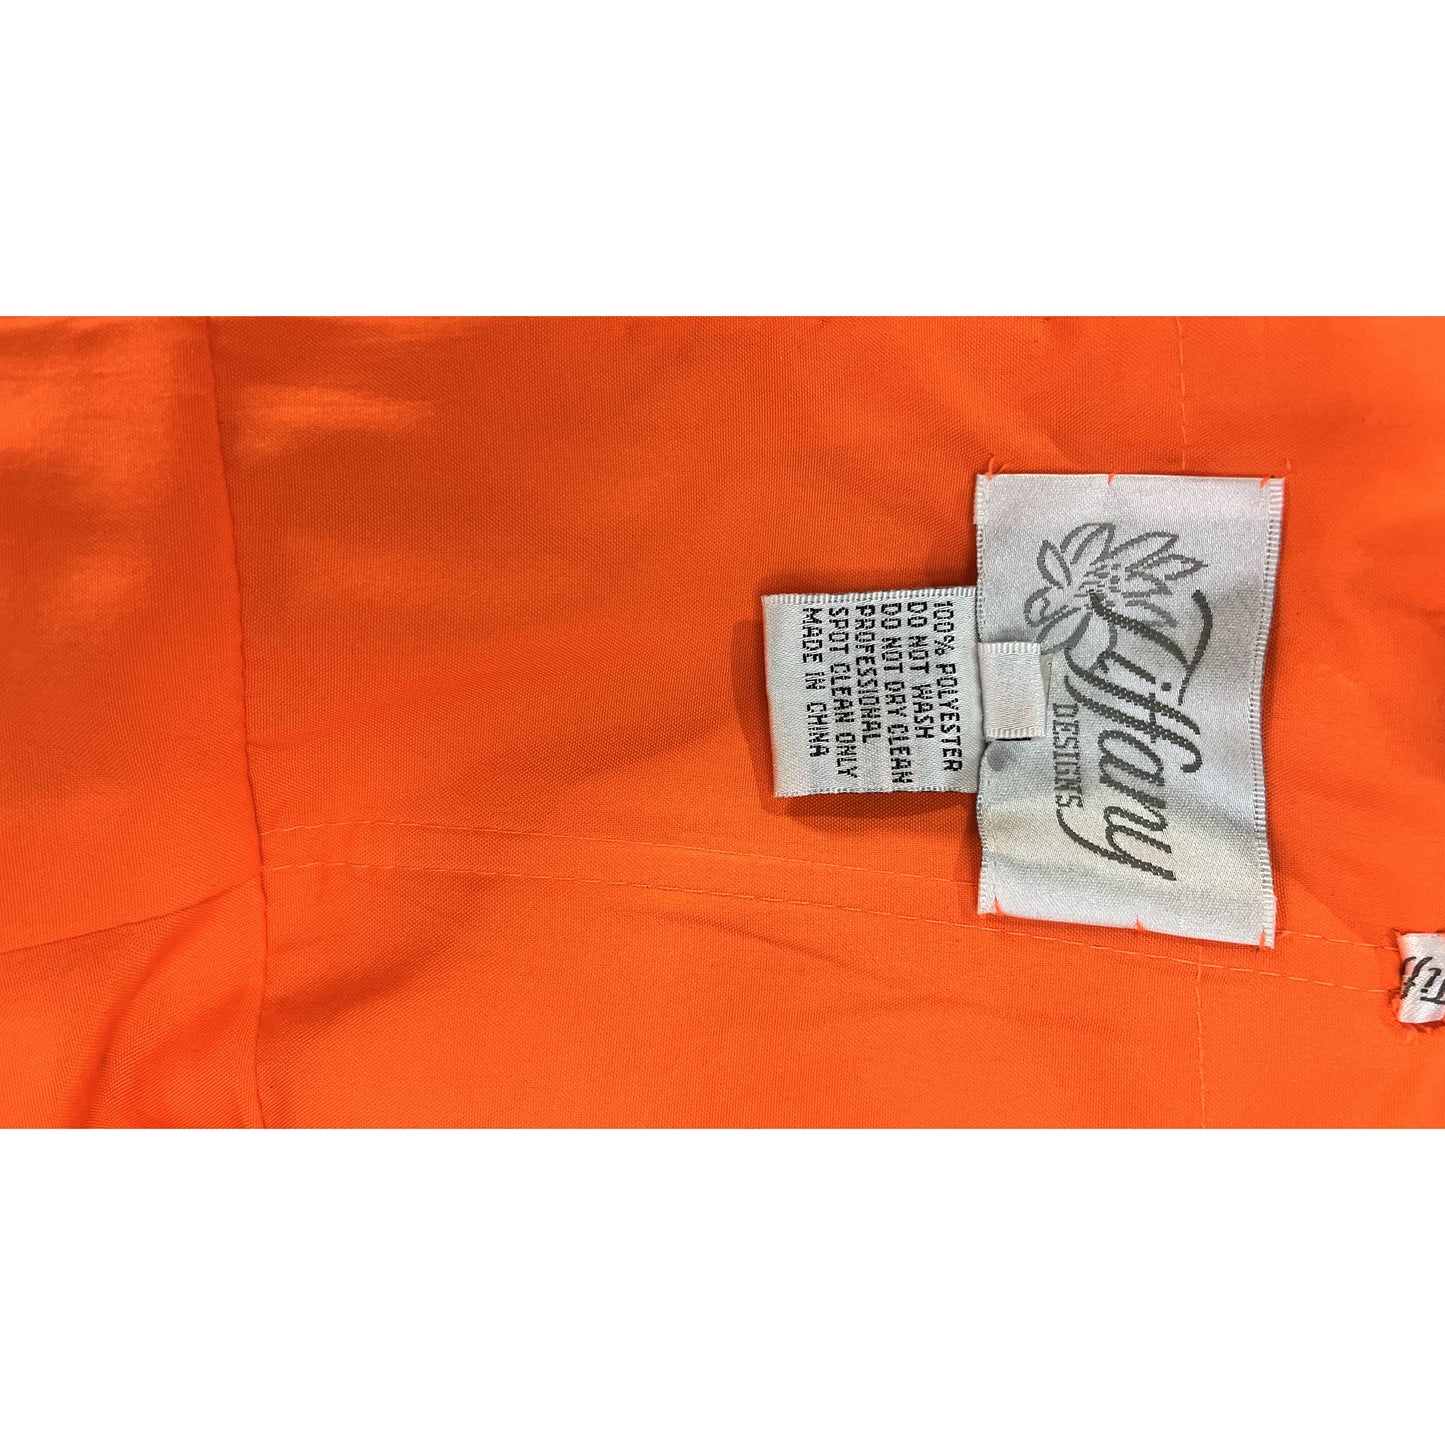 Tiffany Designs Gown Embellished One-Shoulder w Tulle-Watteau-Train Bright Orange Size 6 SKU 000369-6